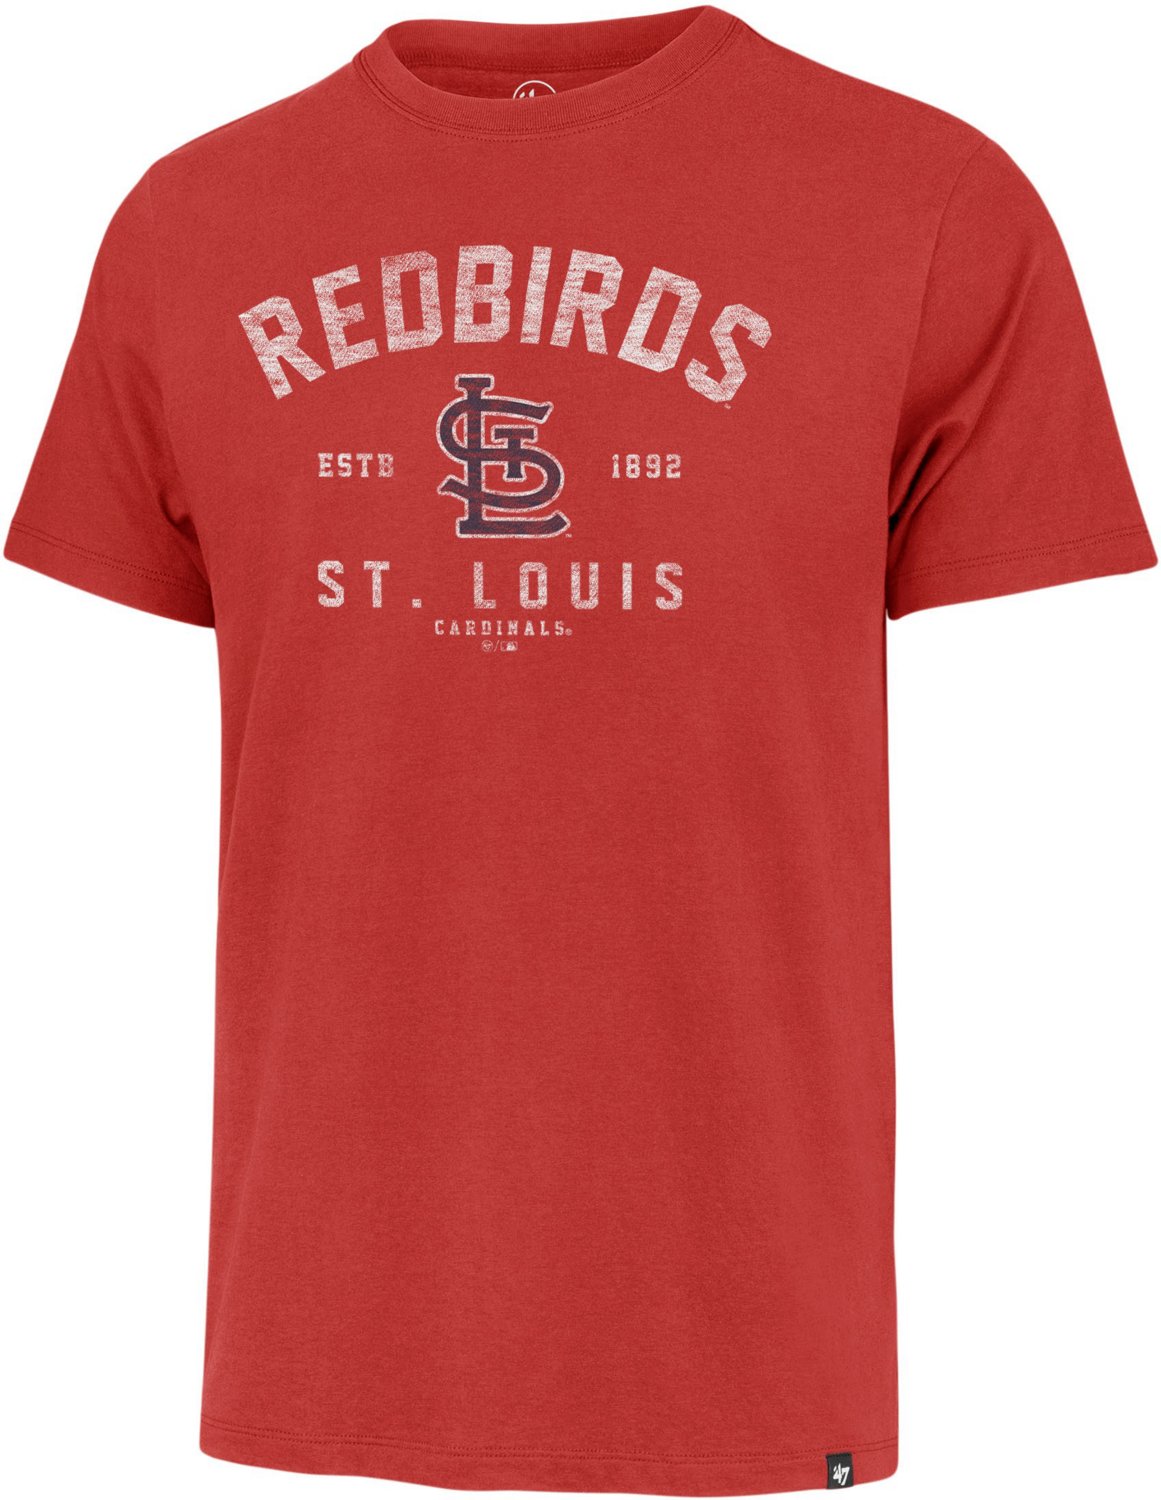 47 St. Louis Cardinals Red Birds Franklin Graphic T-shirt